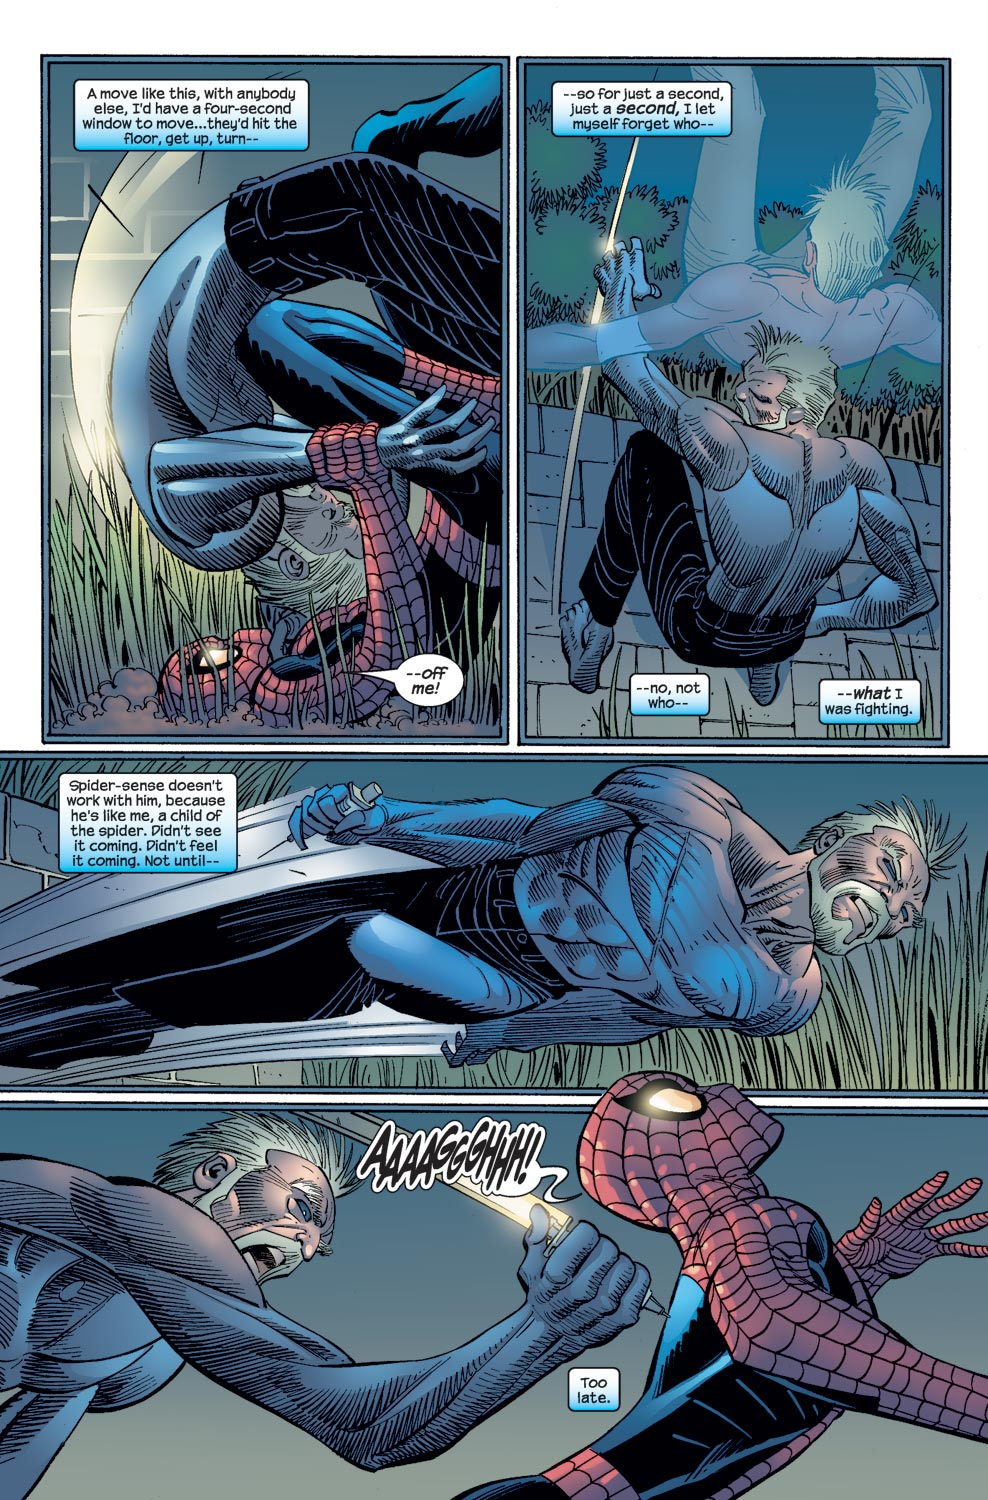 Spider-Man VS Ezekiel 